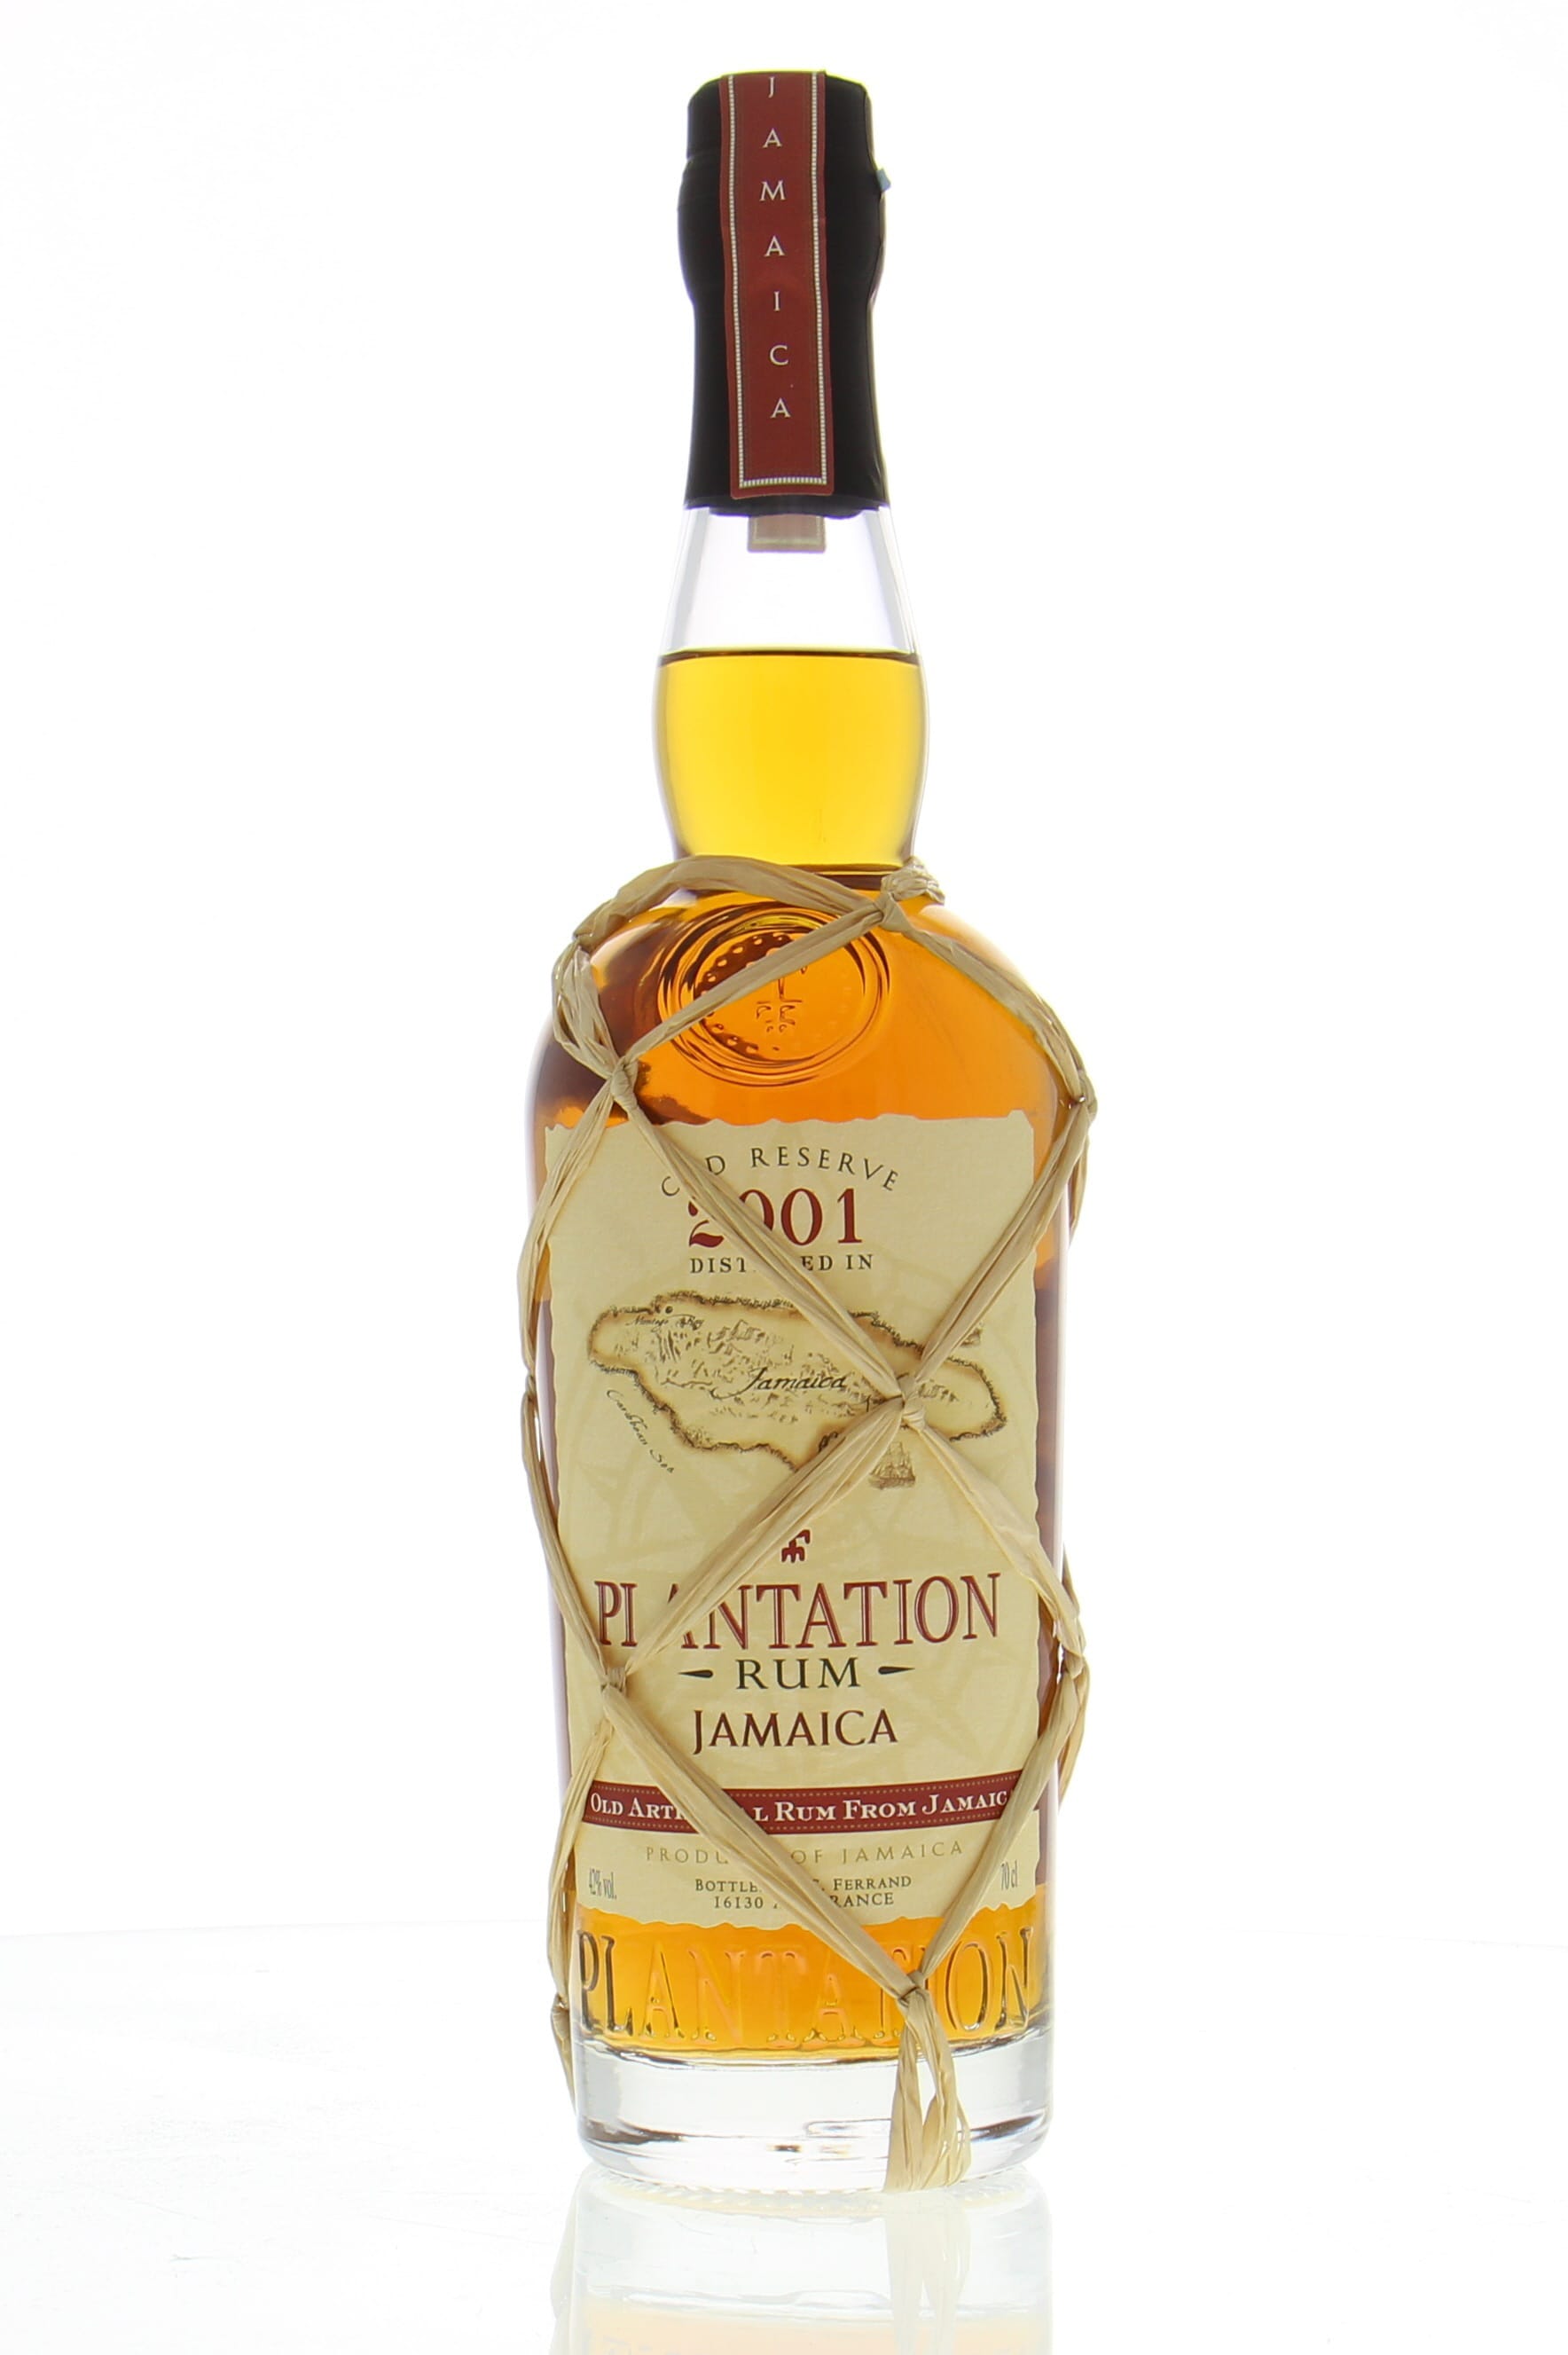 Plantation Rum - Jamaica old reserve 2001 42% 2001 Perfect